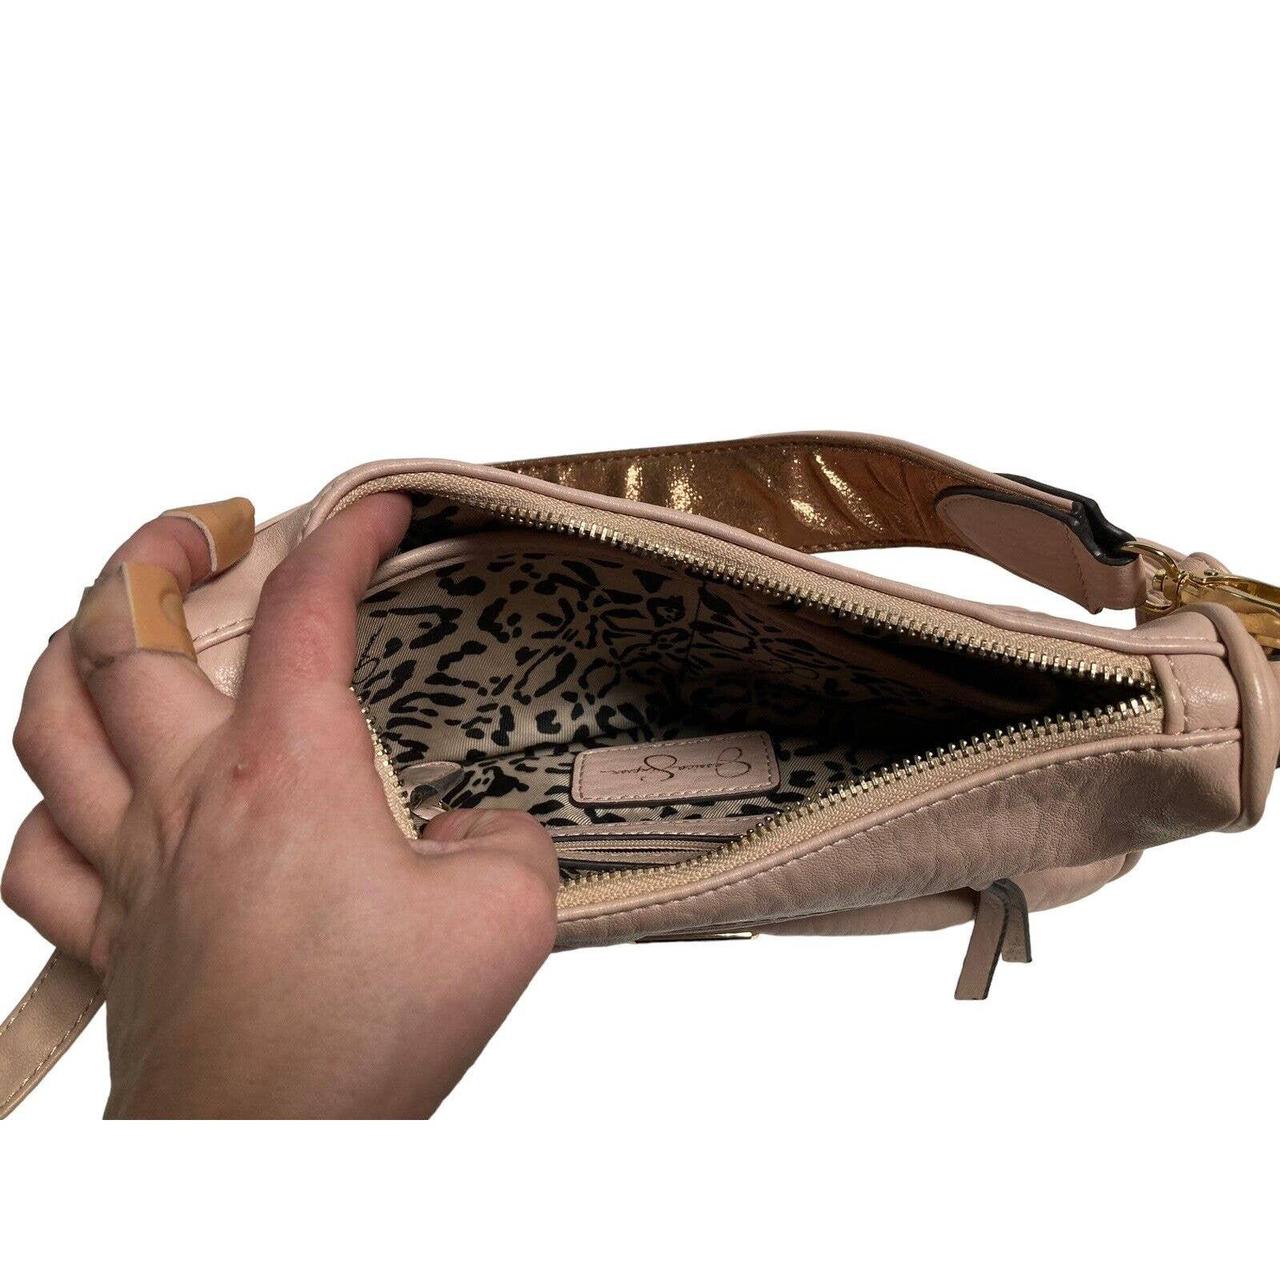 Jessica Simpson Hand Bag - Women's handbags